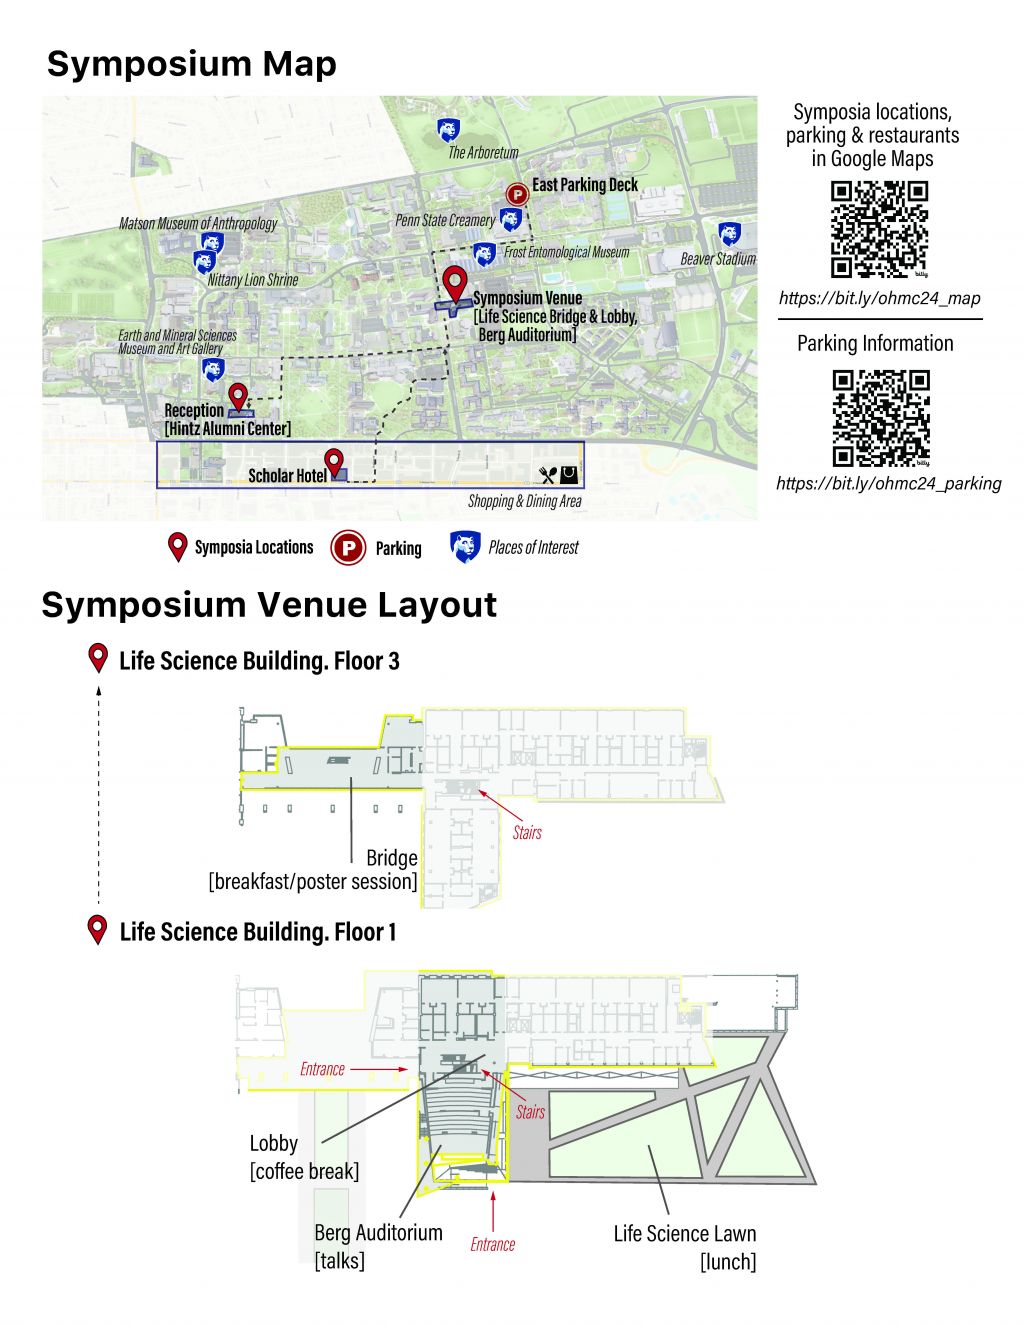 Campus map and symposium venue layout.